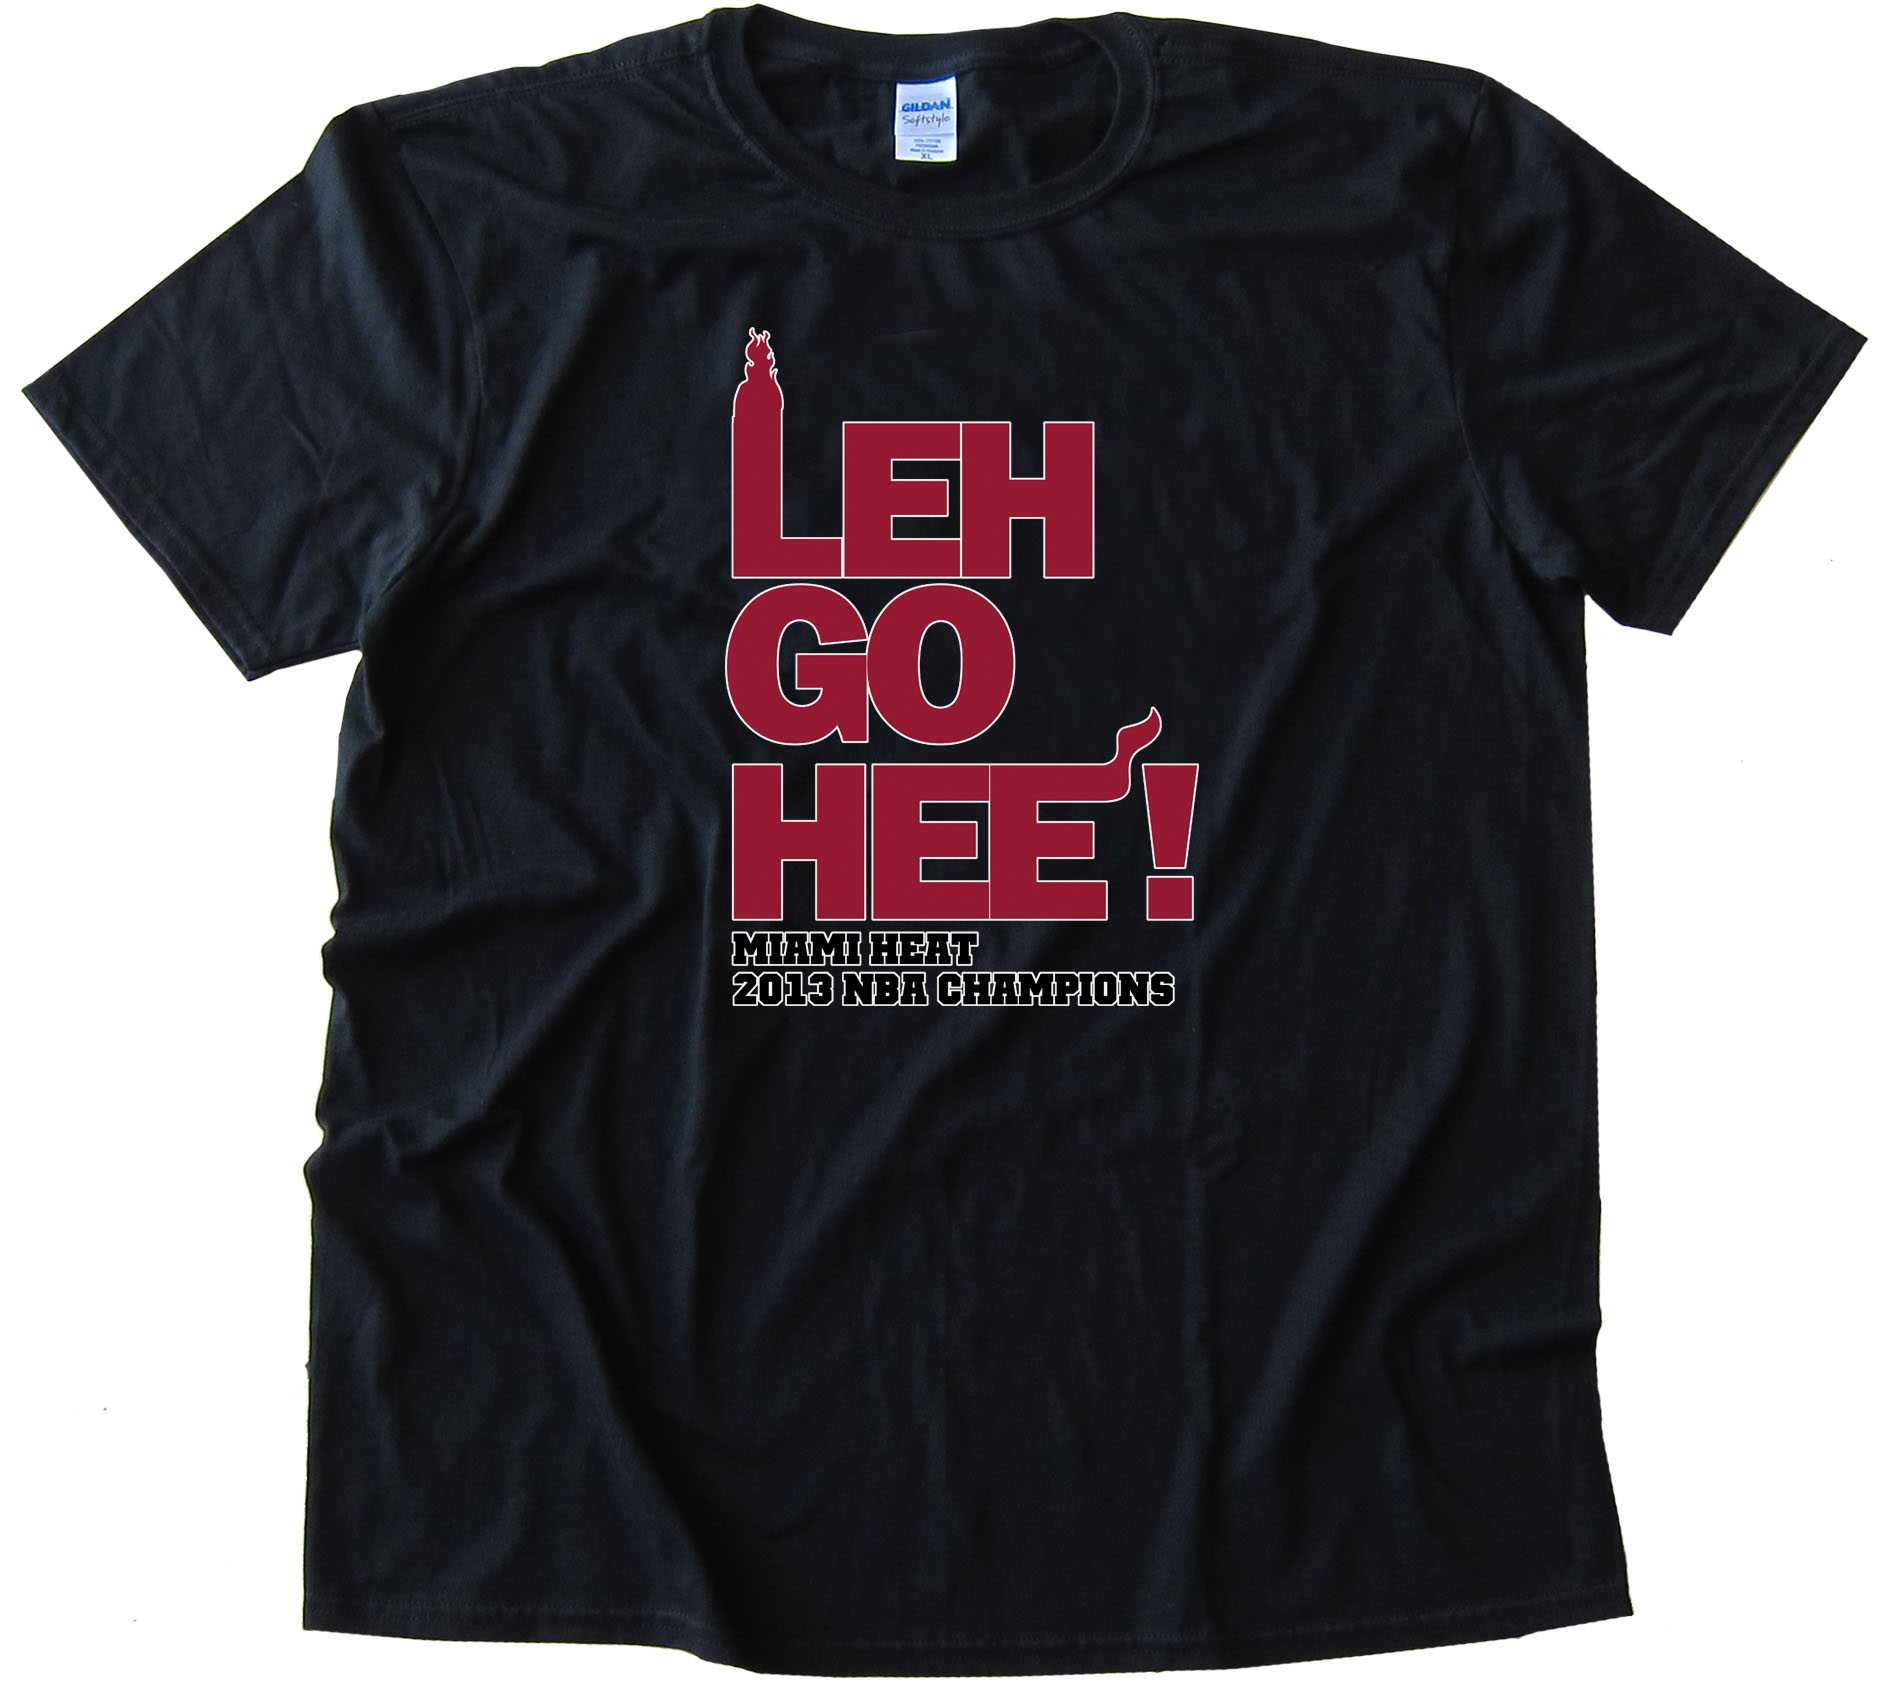 Leh Go Hee! Latin Miami Heat Fans